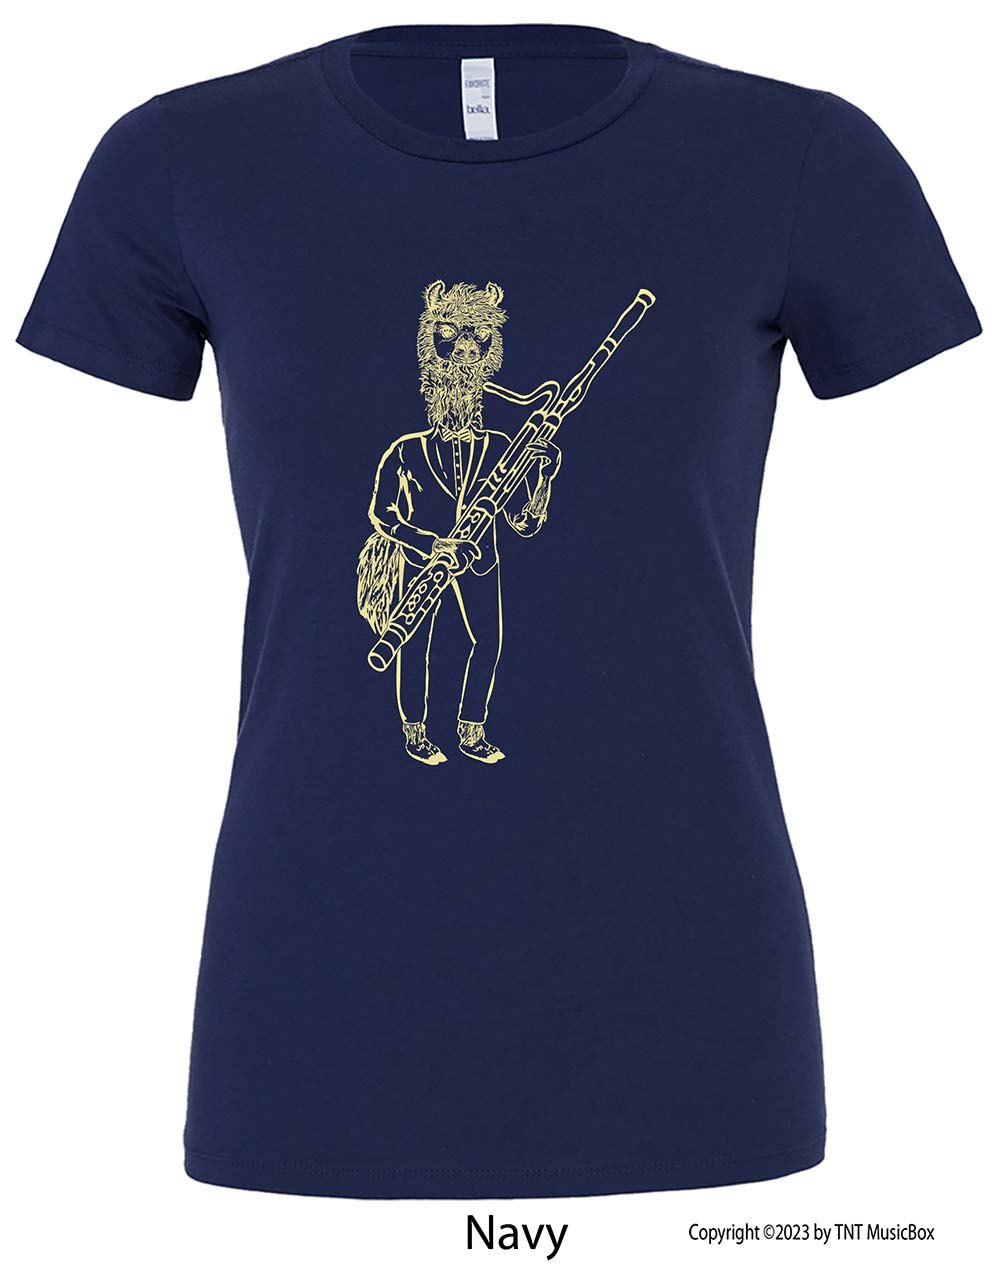 Llama Playing Bassoon on a Navy T-shirt